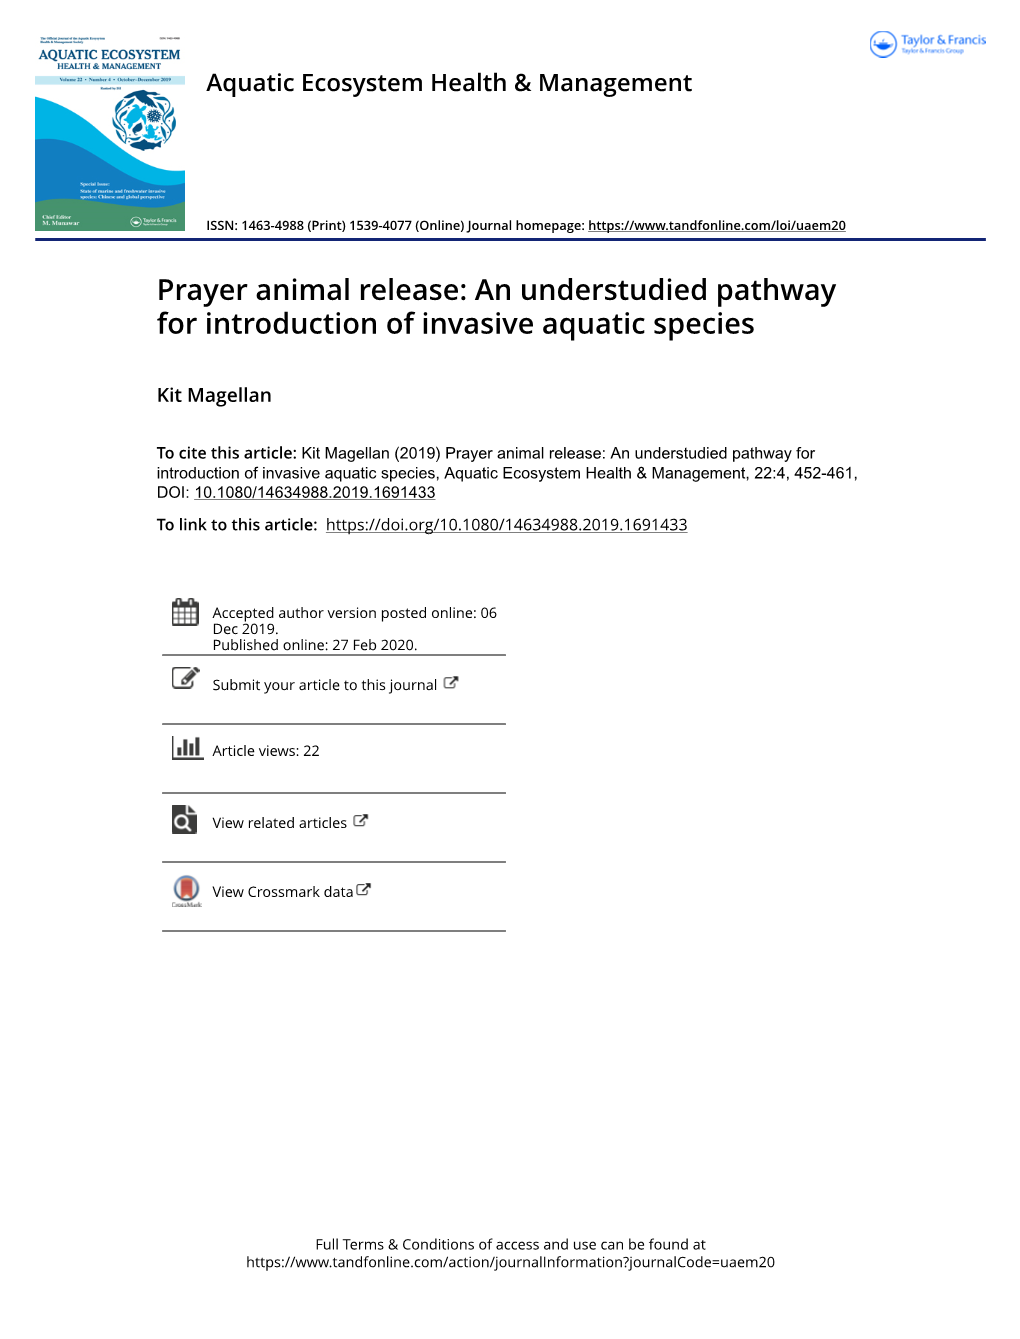 Prayer Animal Release: an Understudied Pathway for Introduction of Invasive Aquatic Species